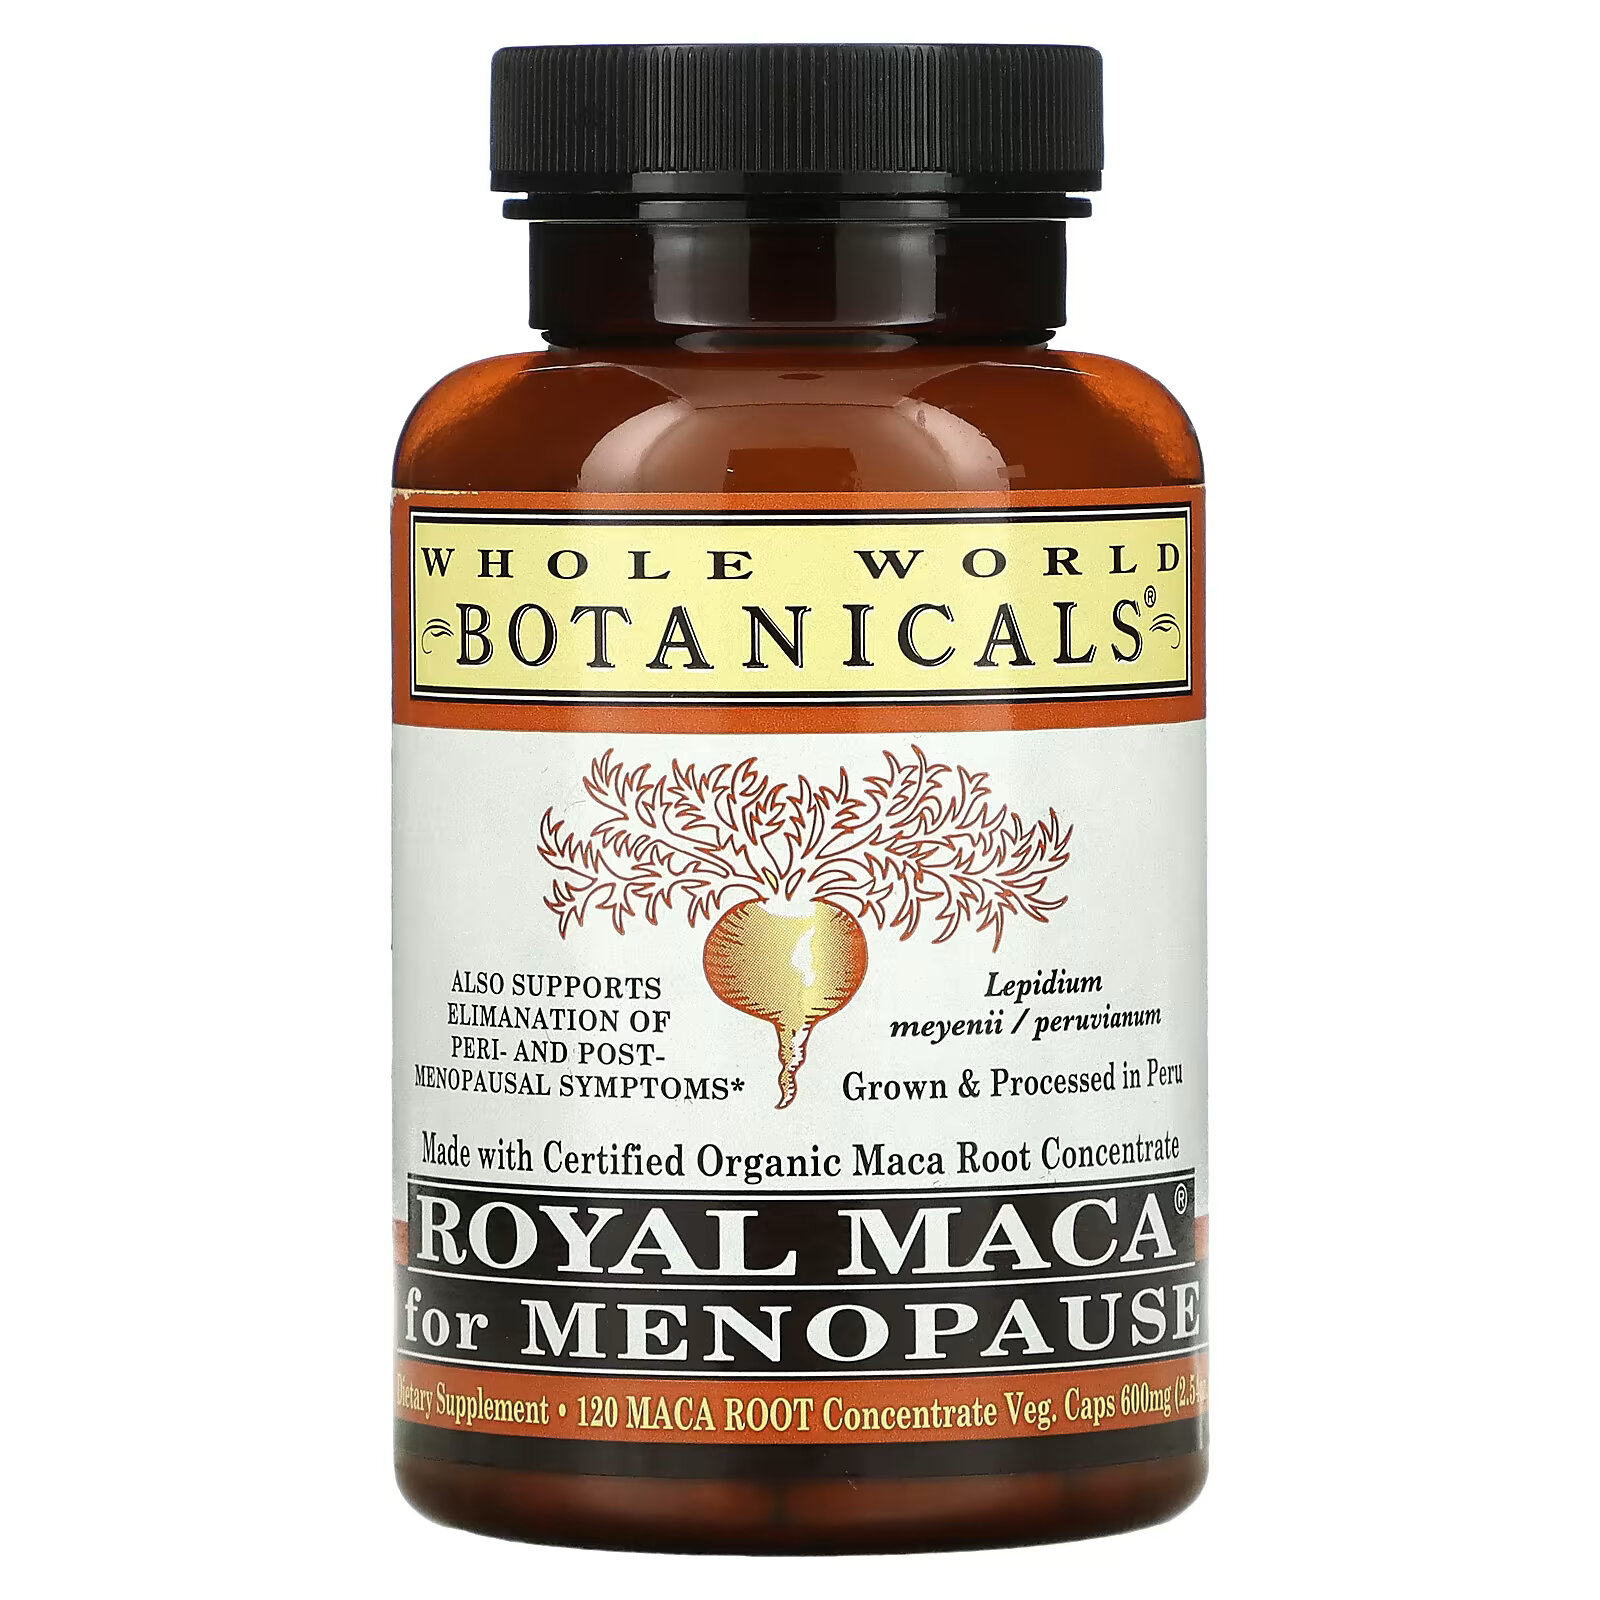 Whole World Botanicals, Royal Maca, королевская мака для приема при менопаузе, 500 мг, 120 вегетарианских капсул